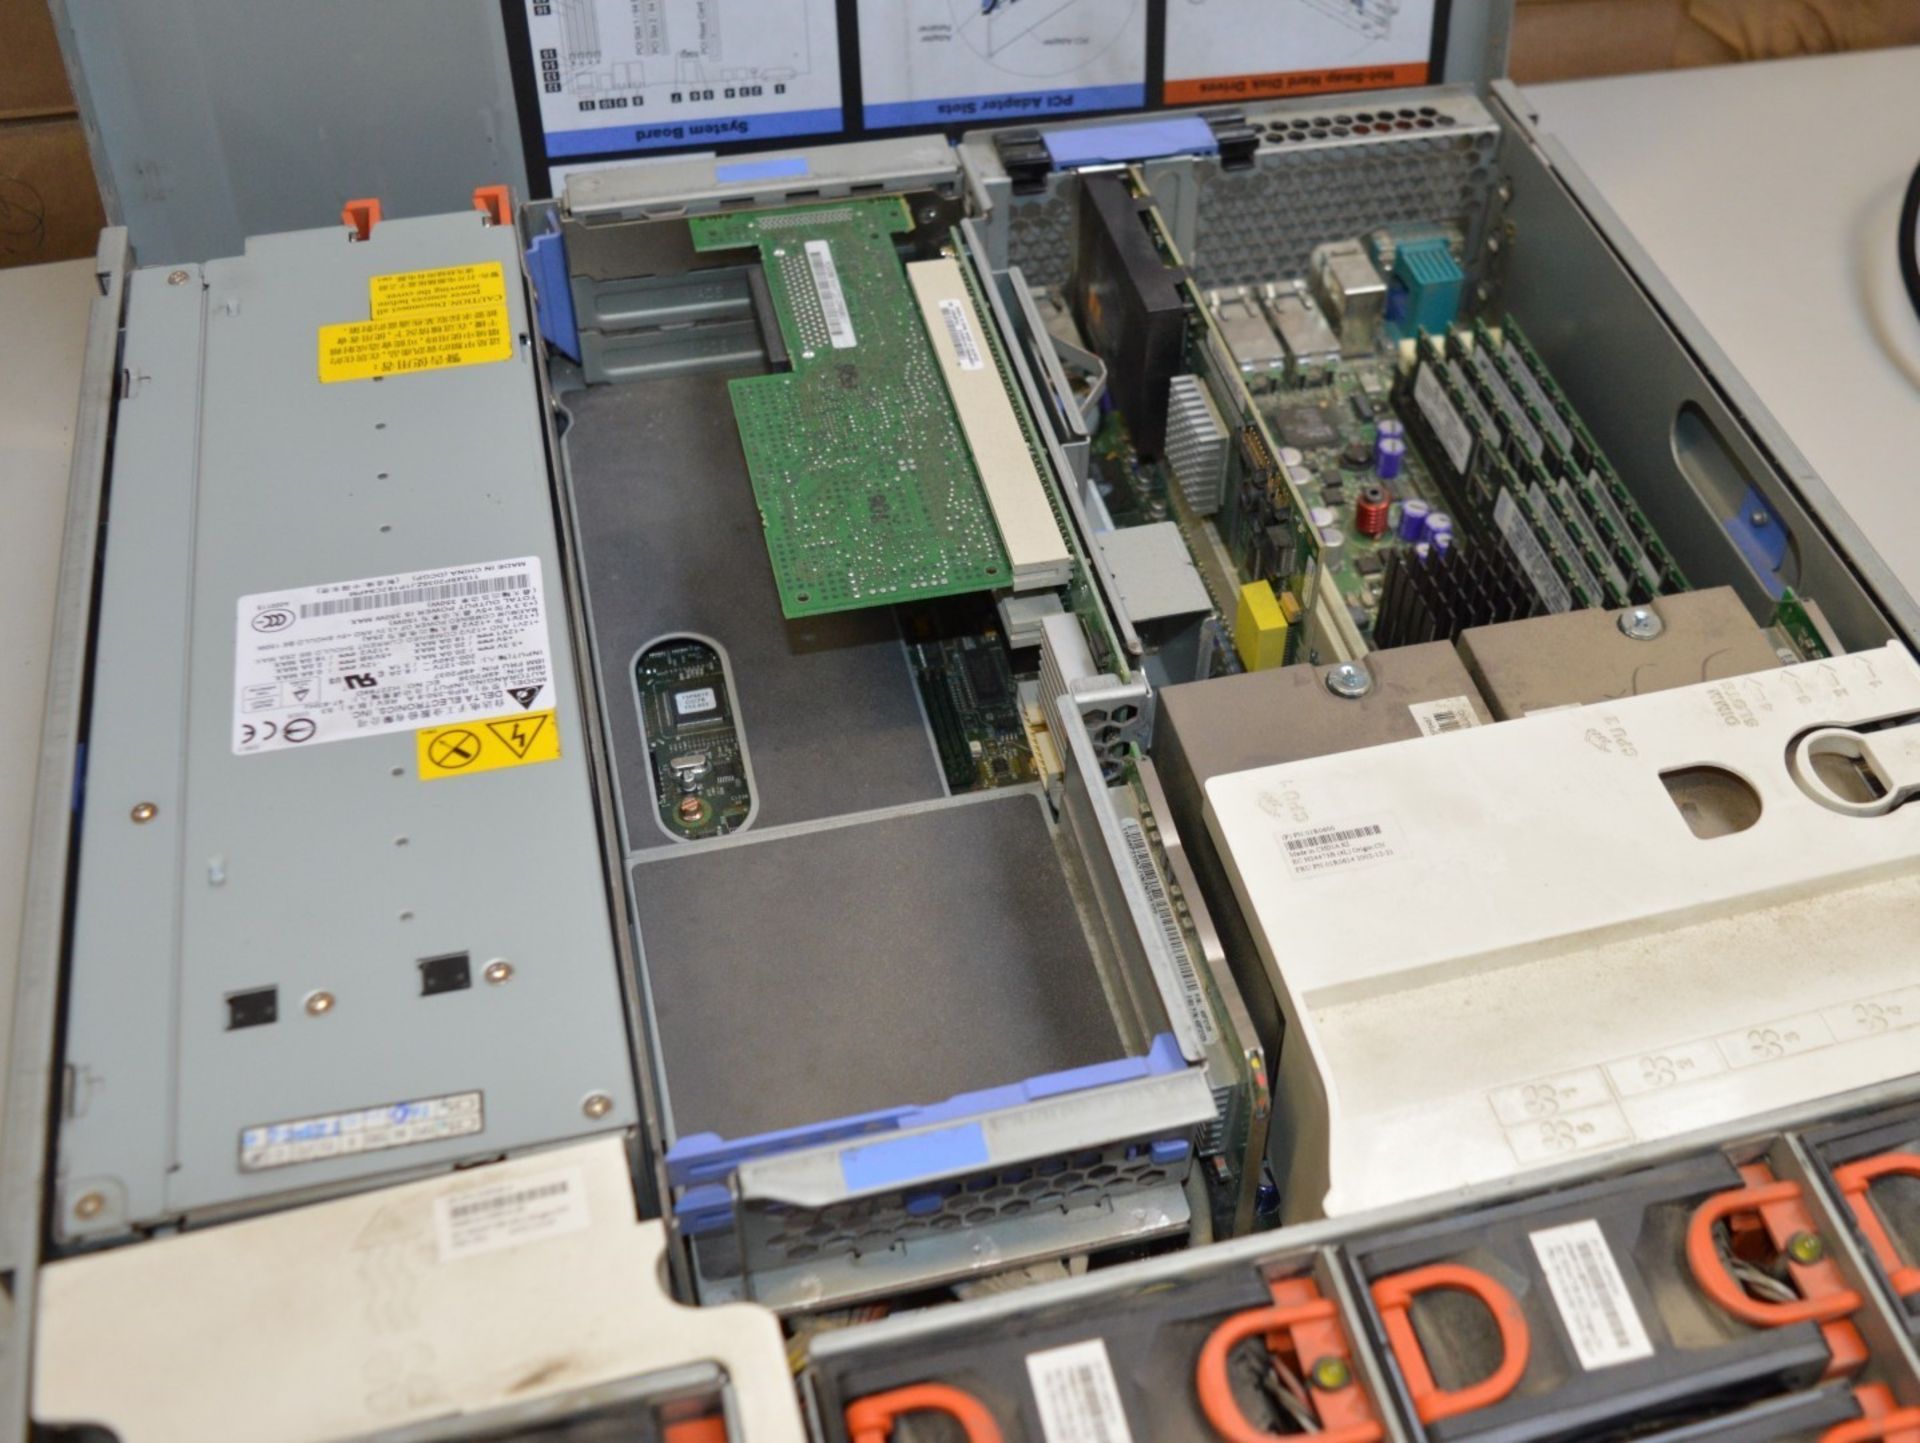 1 x IBM xSeries 345 Server - Includes Dual Xeon Processors, 1gb Ram, Raid Card - Hard Disk Drives - Image 8 of 8